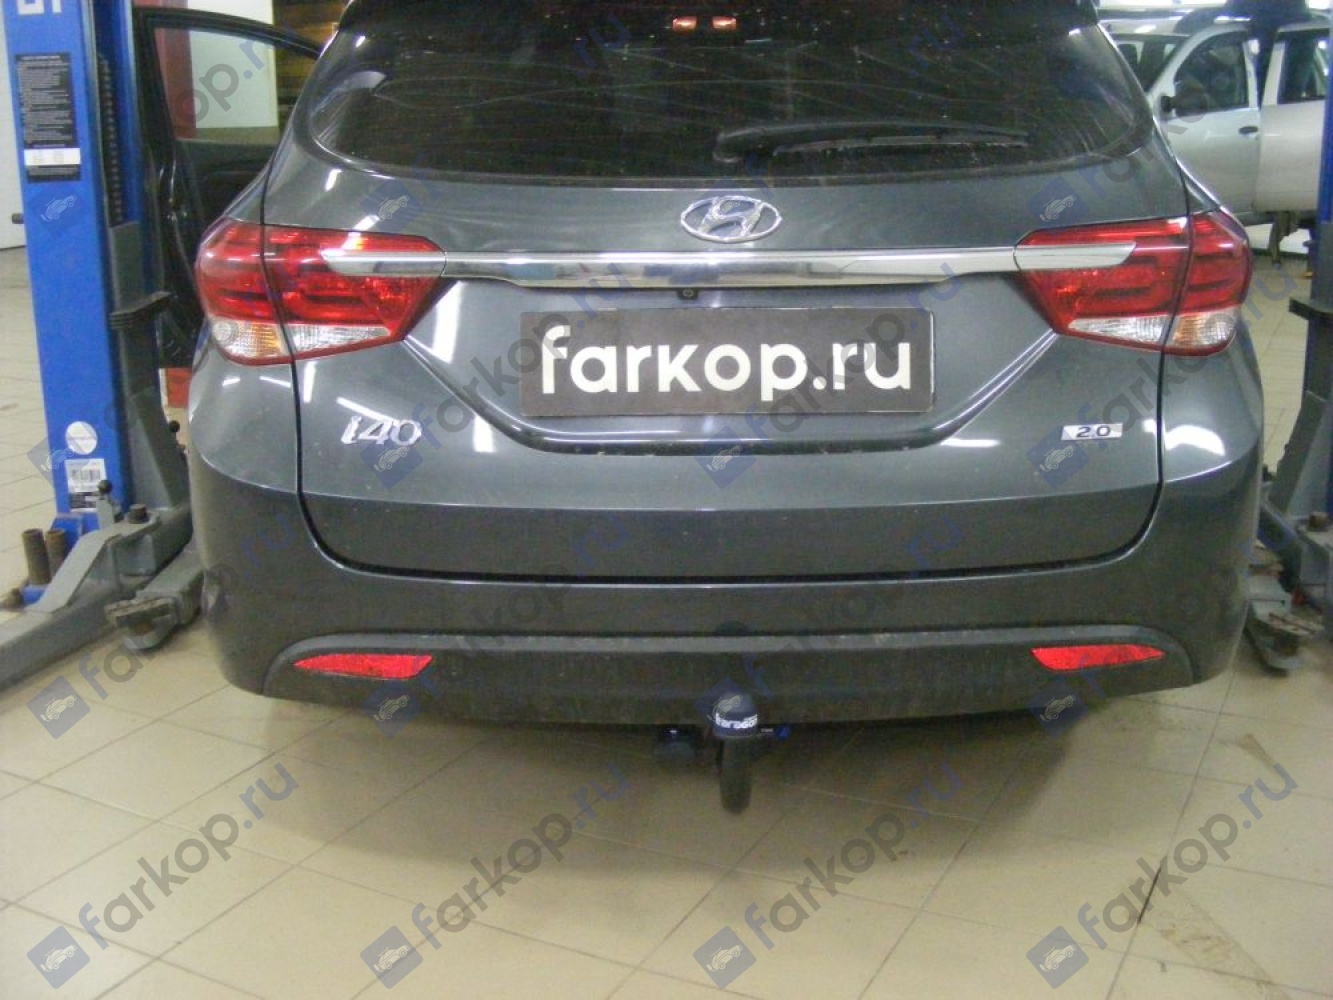 Фаркоп Aragon для Hyundai i40 (седан, универсал) 2012- E2518AV в 